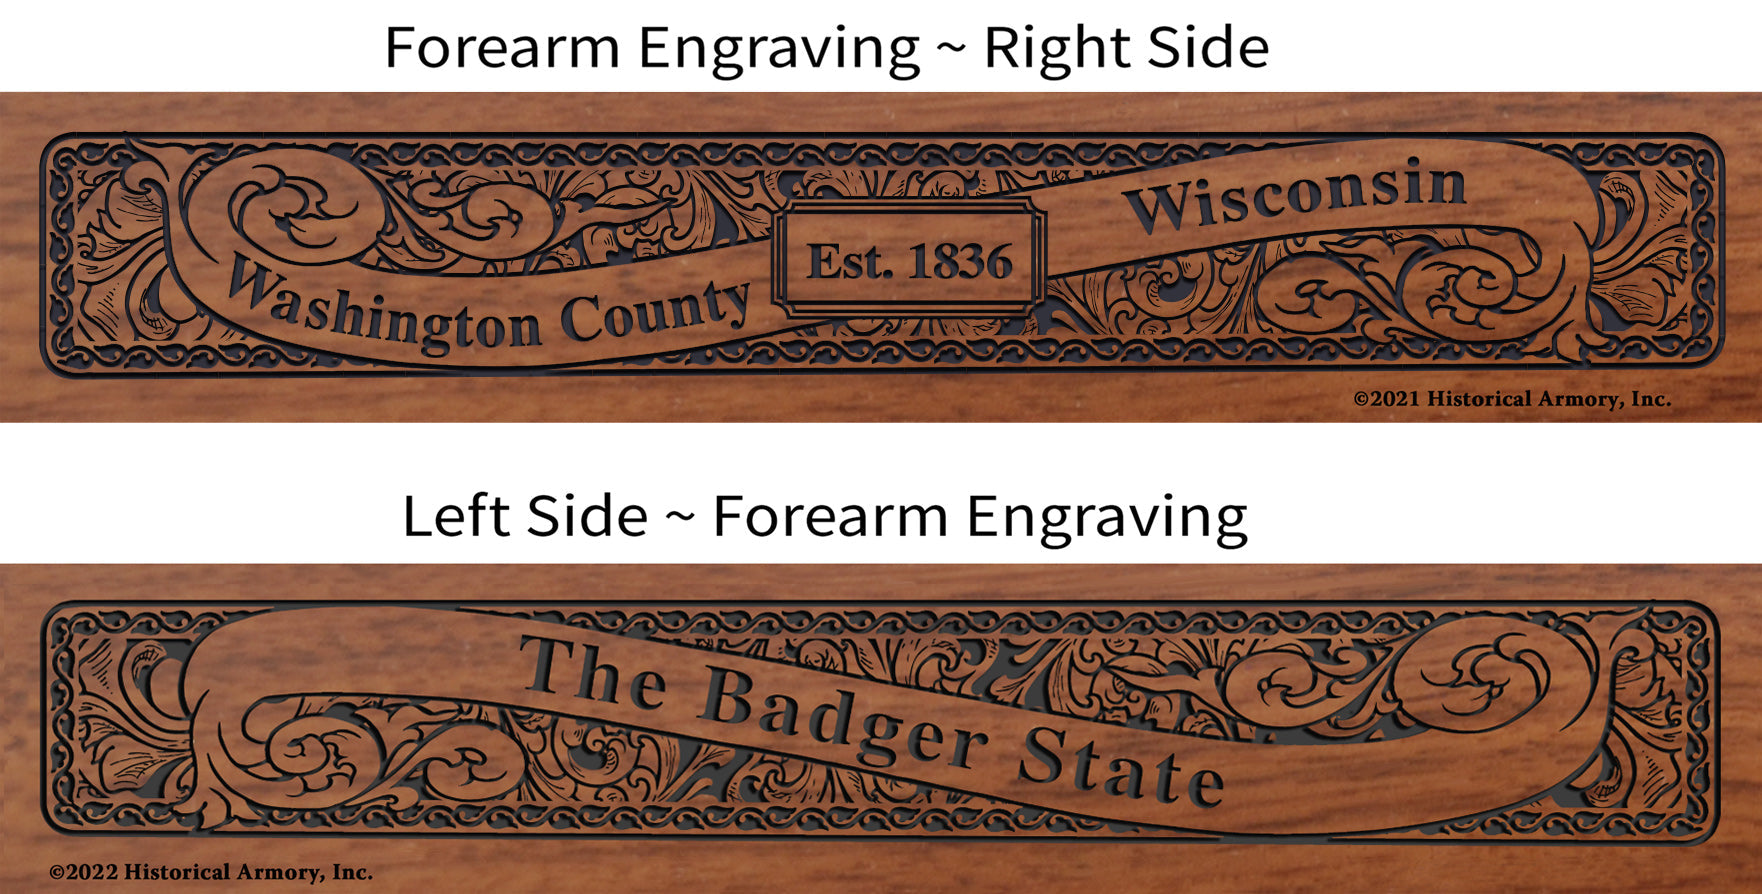 Washington County Wisconsin Engraved Rifle Forearm